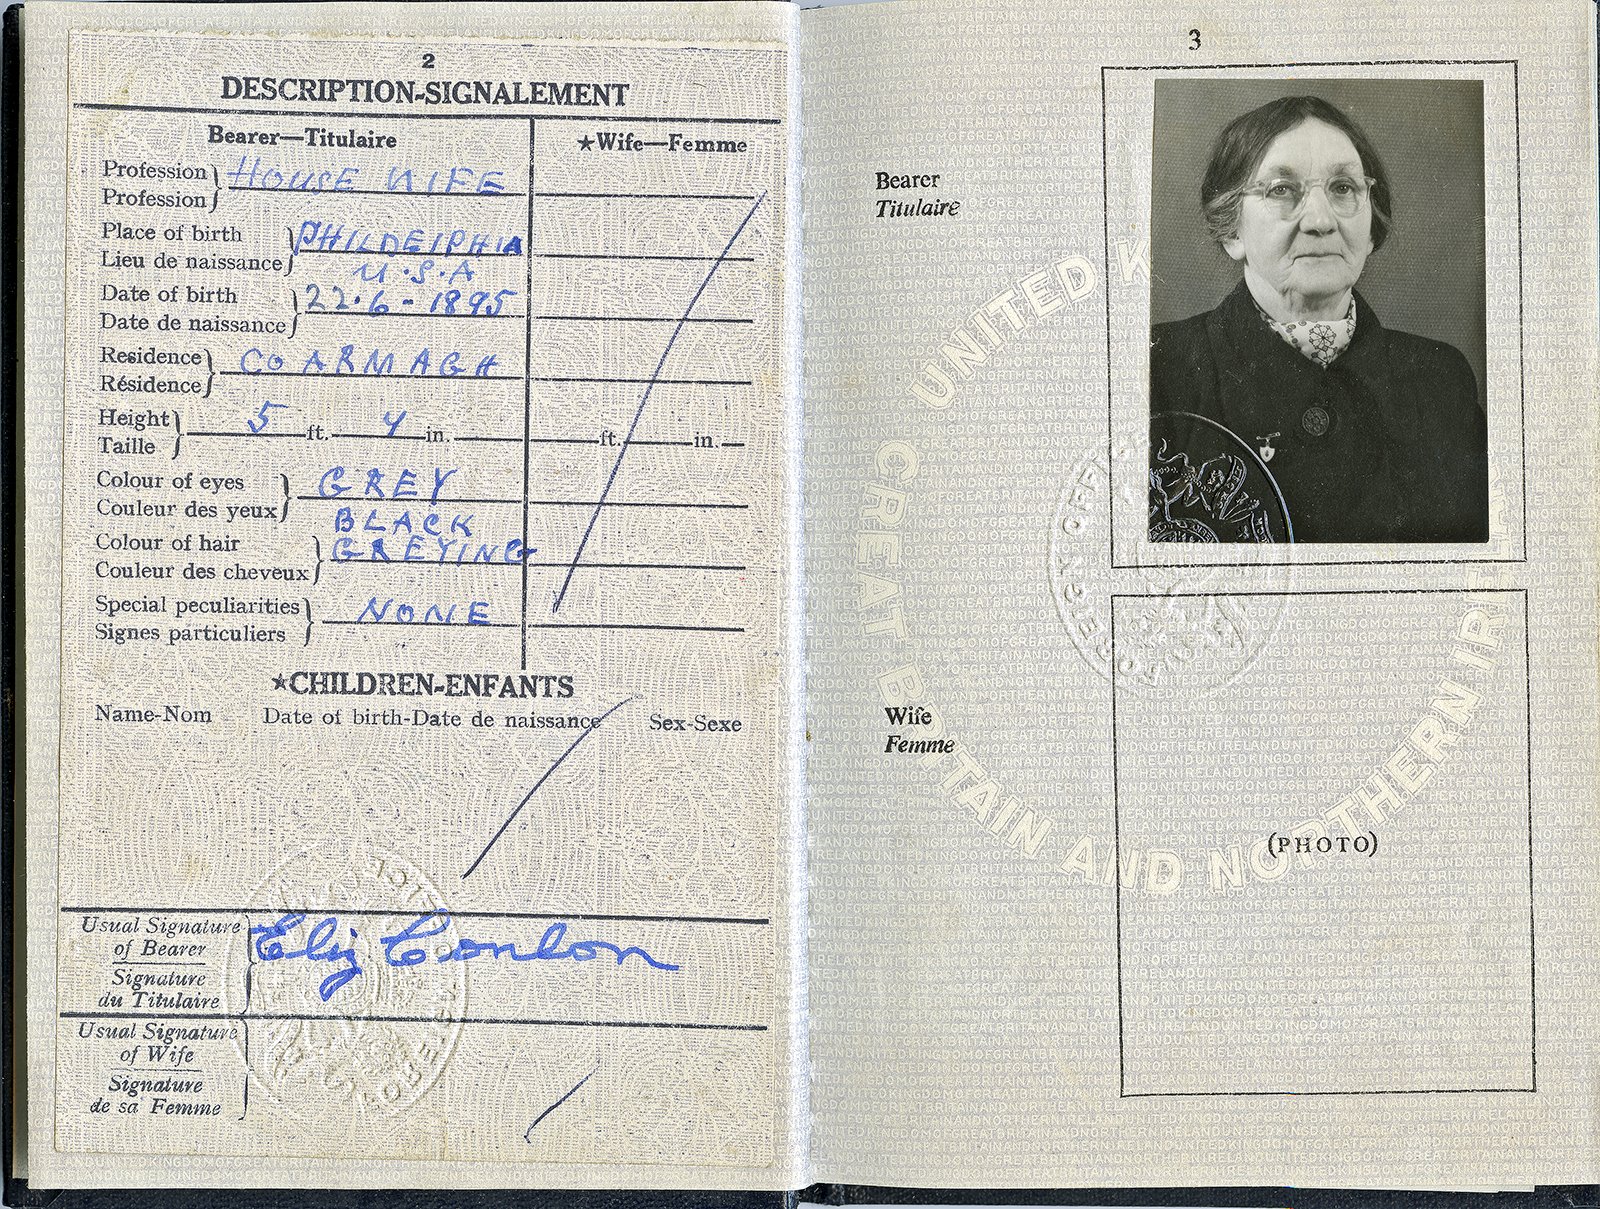 Irish passport for Elizabeth Conlon (neé Mullan) born Philadelphia in 1895, lived in Armagh.